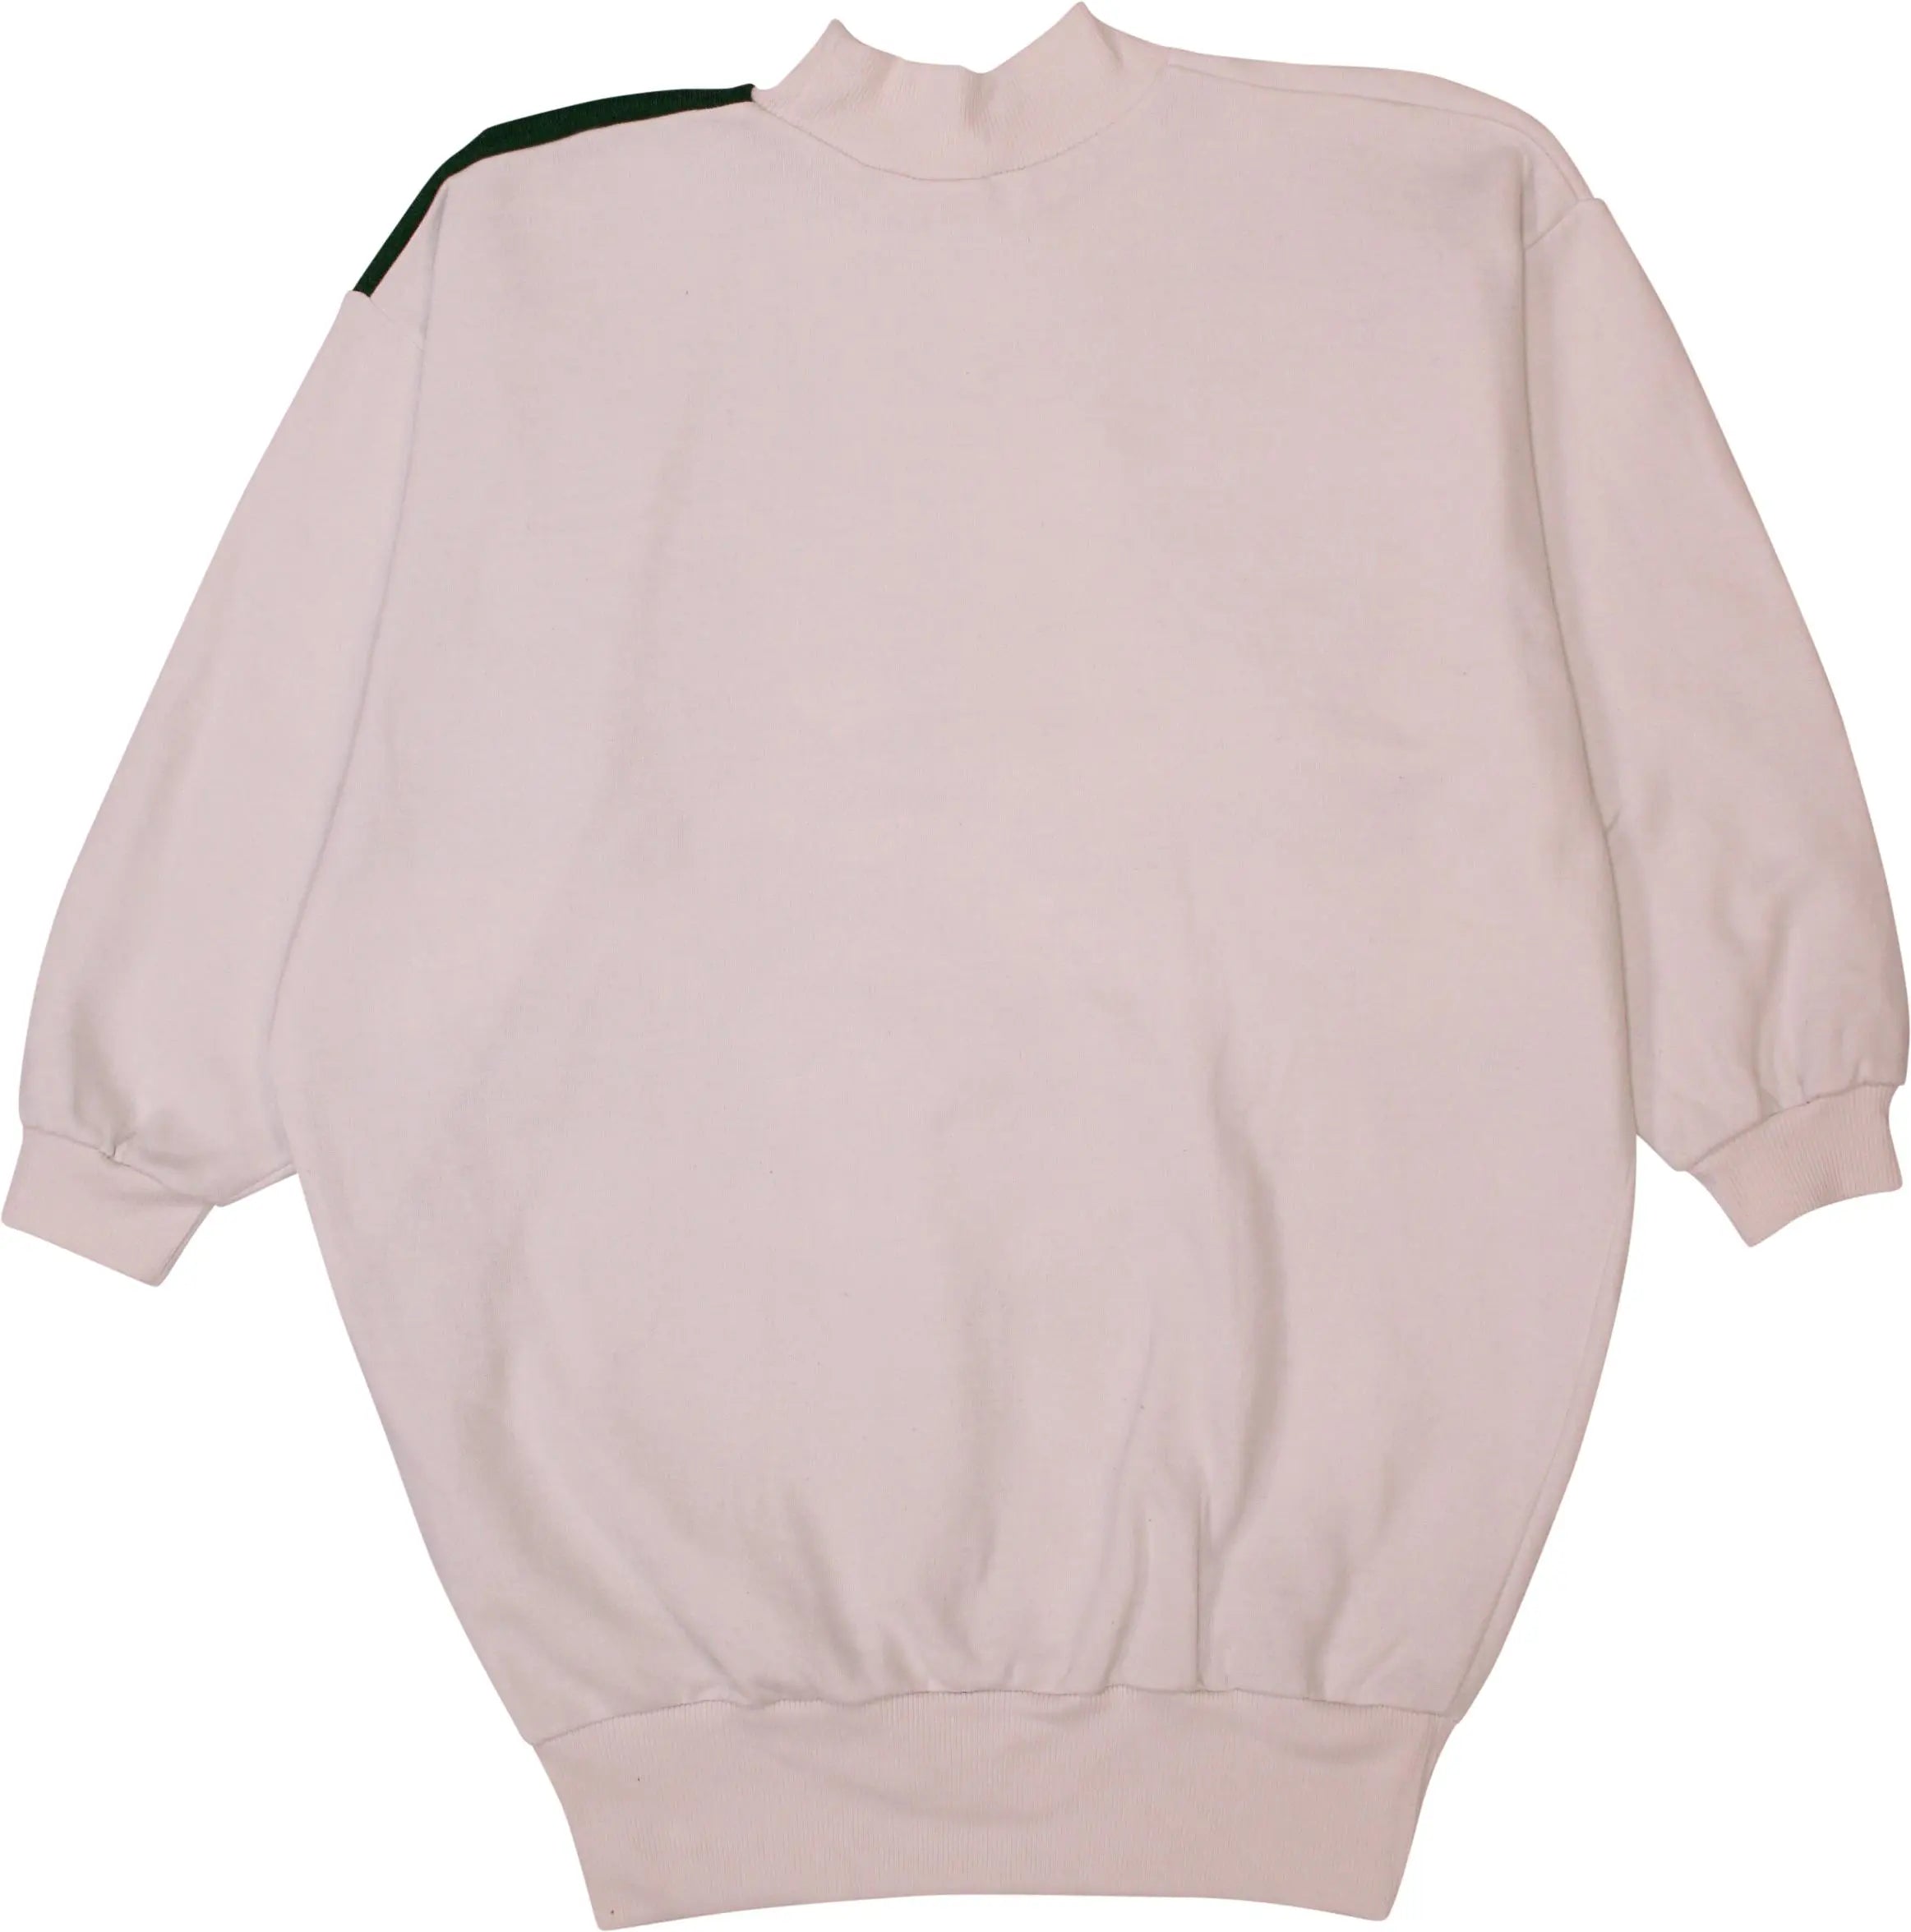 Disney - Americanwear Mickey Crewneck Sweatshirt- ThriftTale.com - Vintage and second handclothing